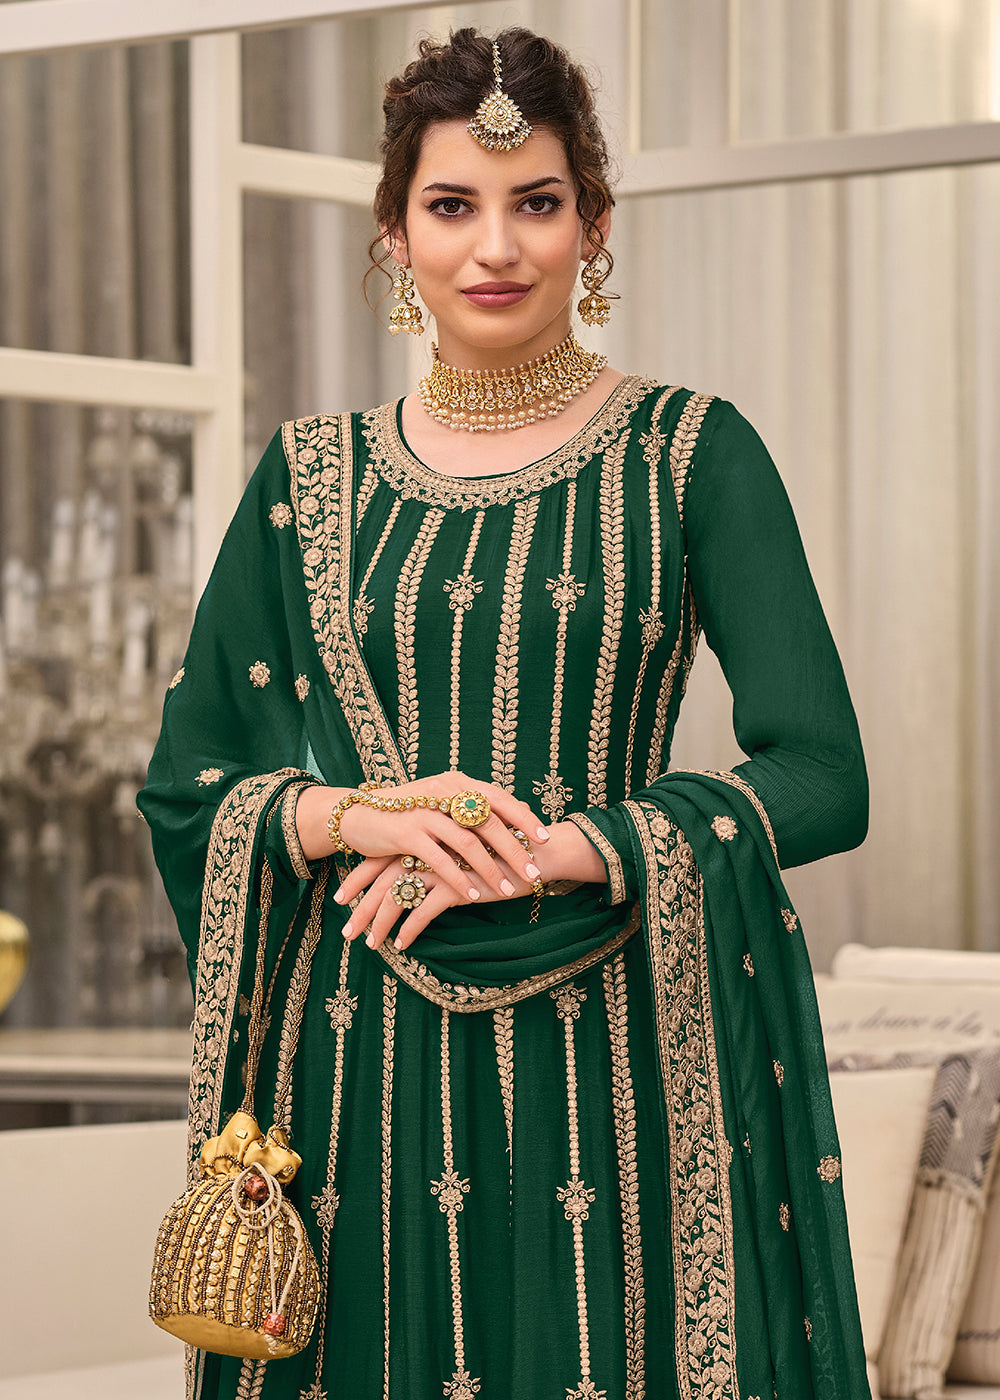 Buy Now Punjabi Style Enthralling Green Wedding Palazzo Suit Online in UK at Empress Clothing. 